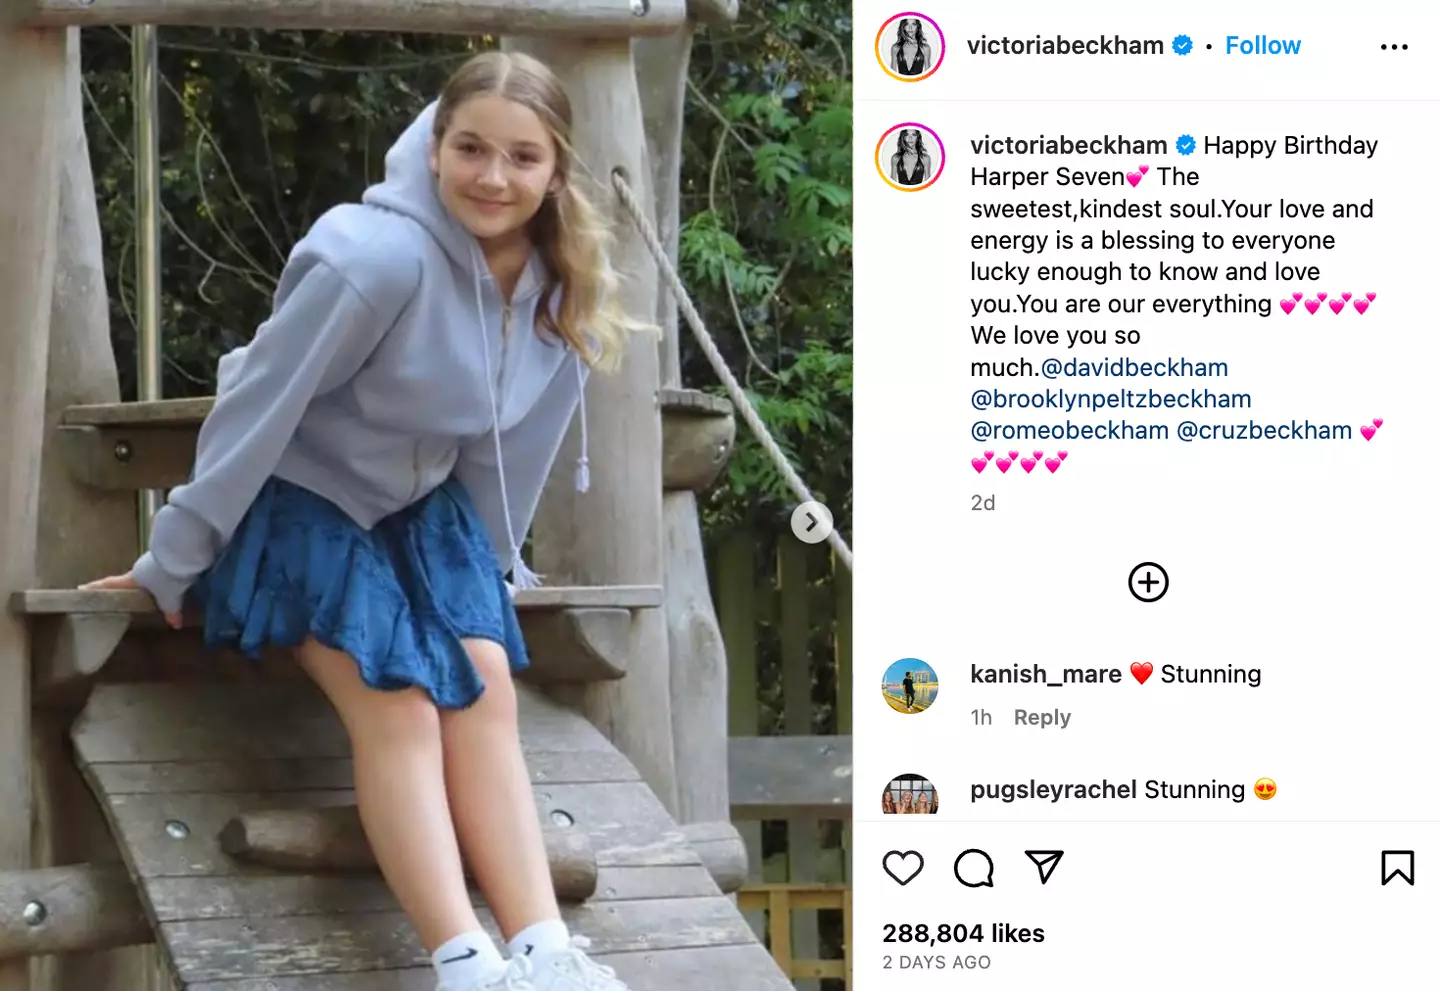 Victoria Beckham wished her daughter a happy birthday on Instagram.